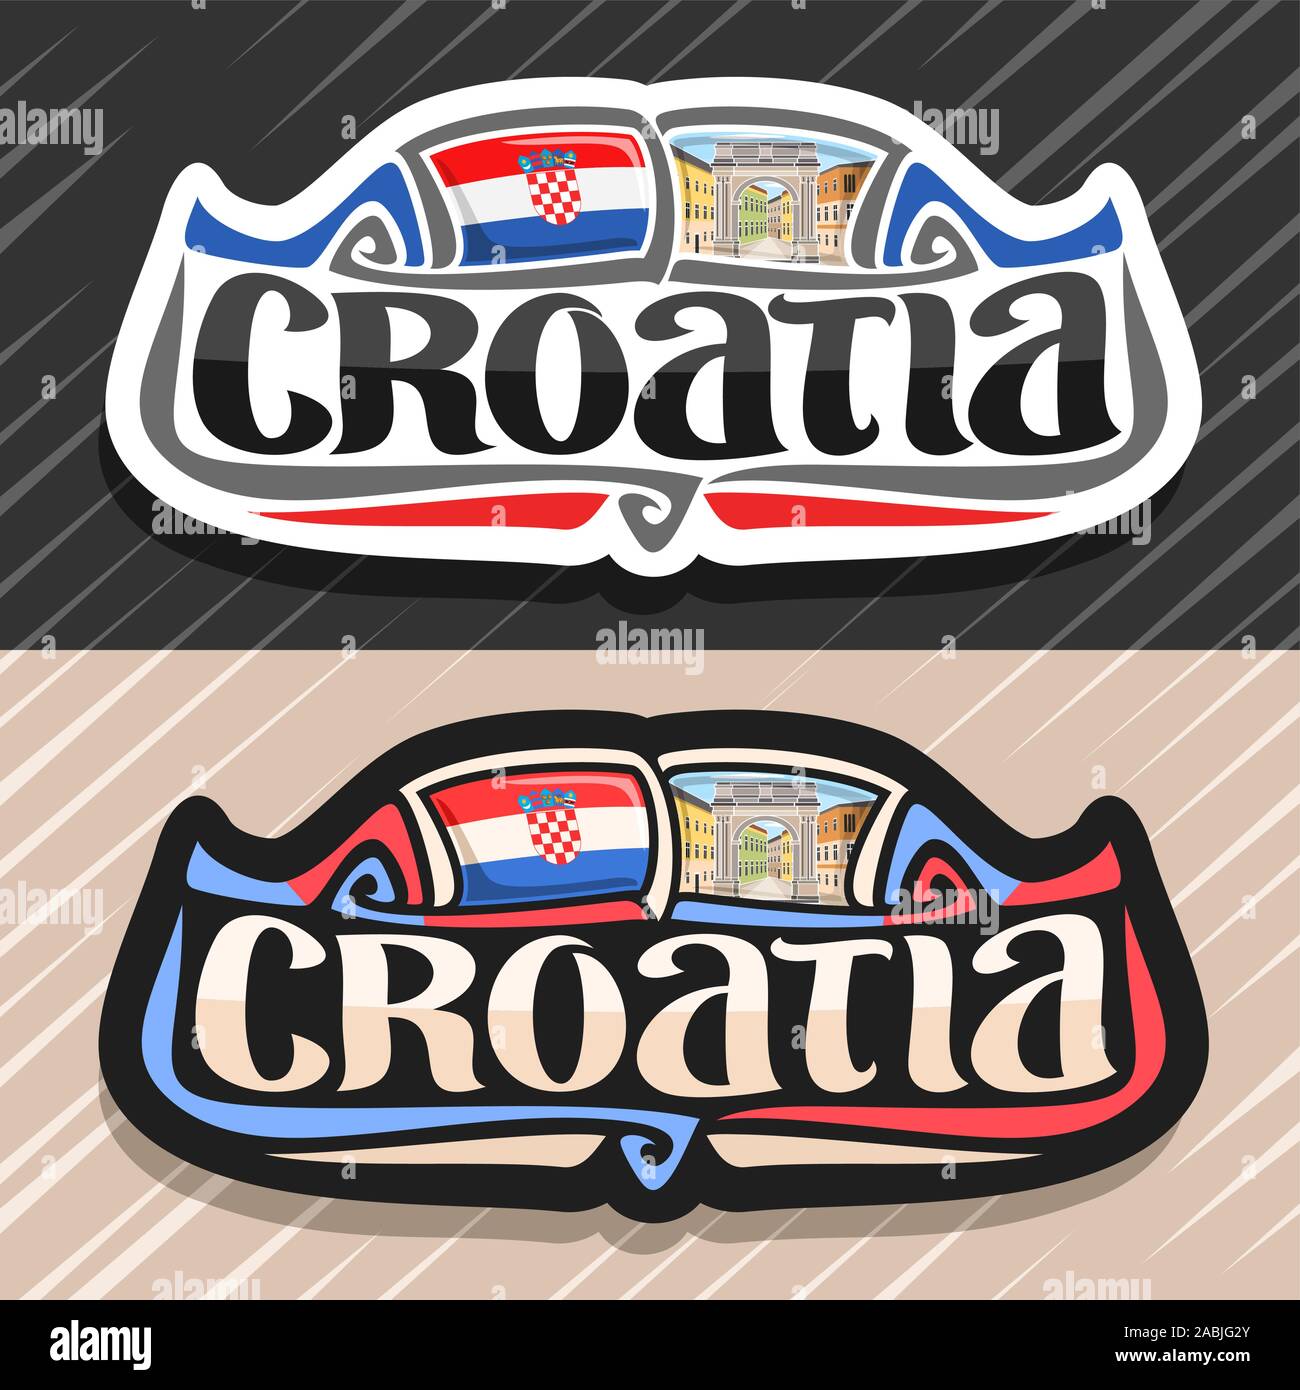 Vector logo for Croatia country, fridge magnet with croatian flag, original brush typeface for word croatia and national croatian symbol - Triumphal A Stock Vector